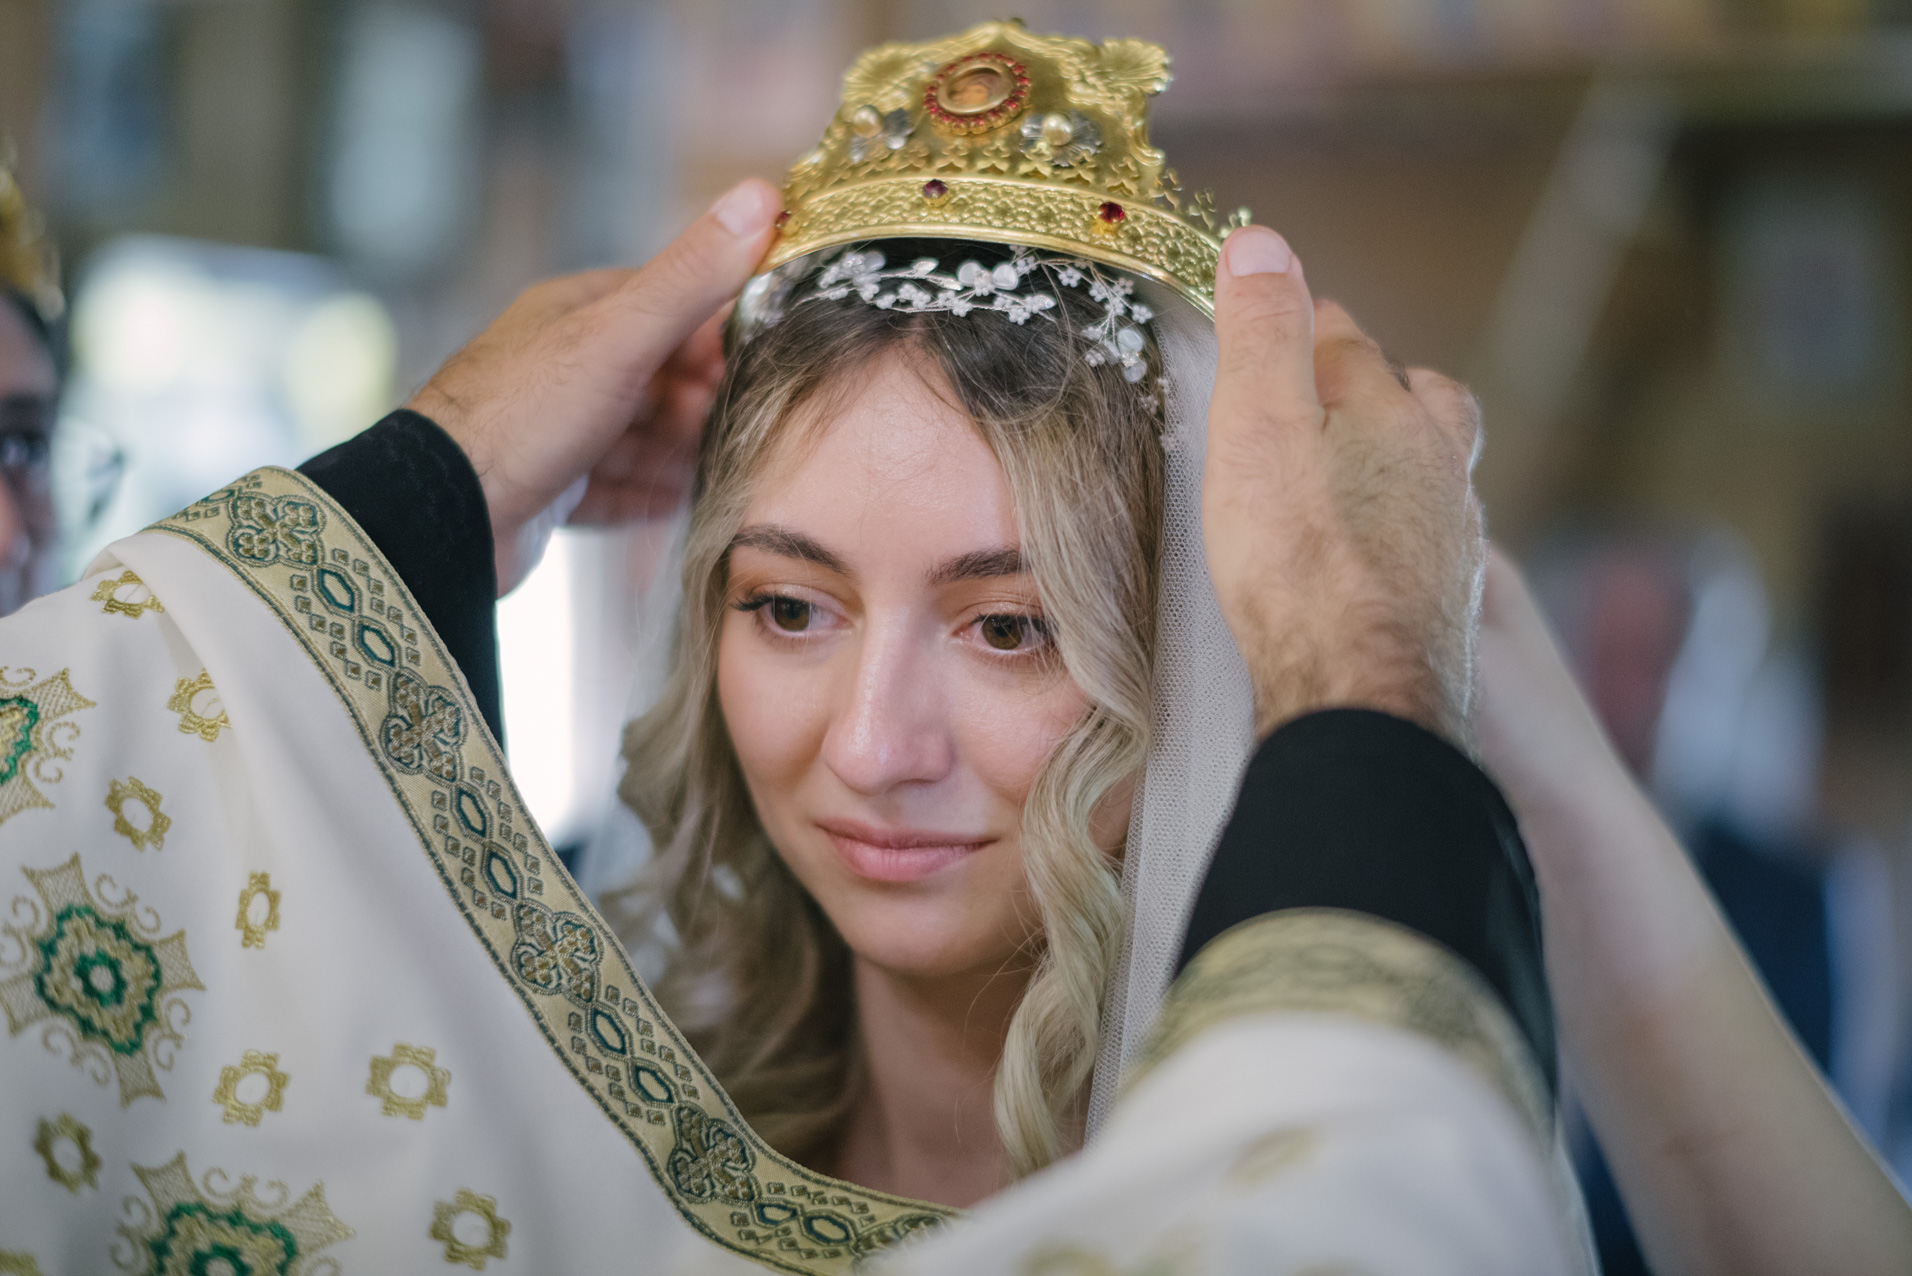 Orthodox wedding ceremony